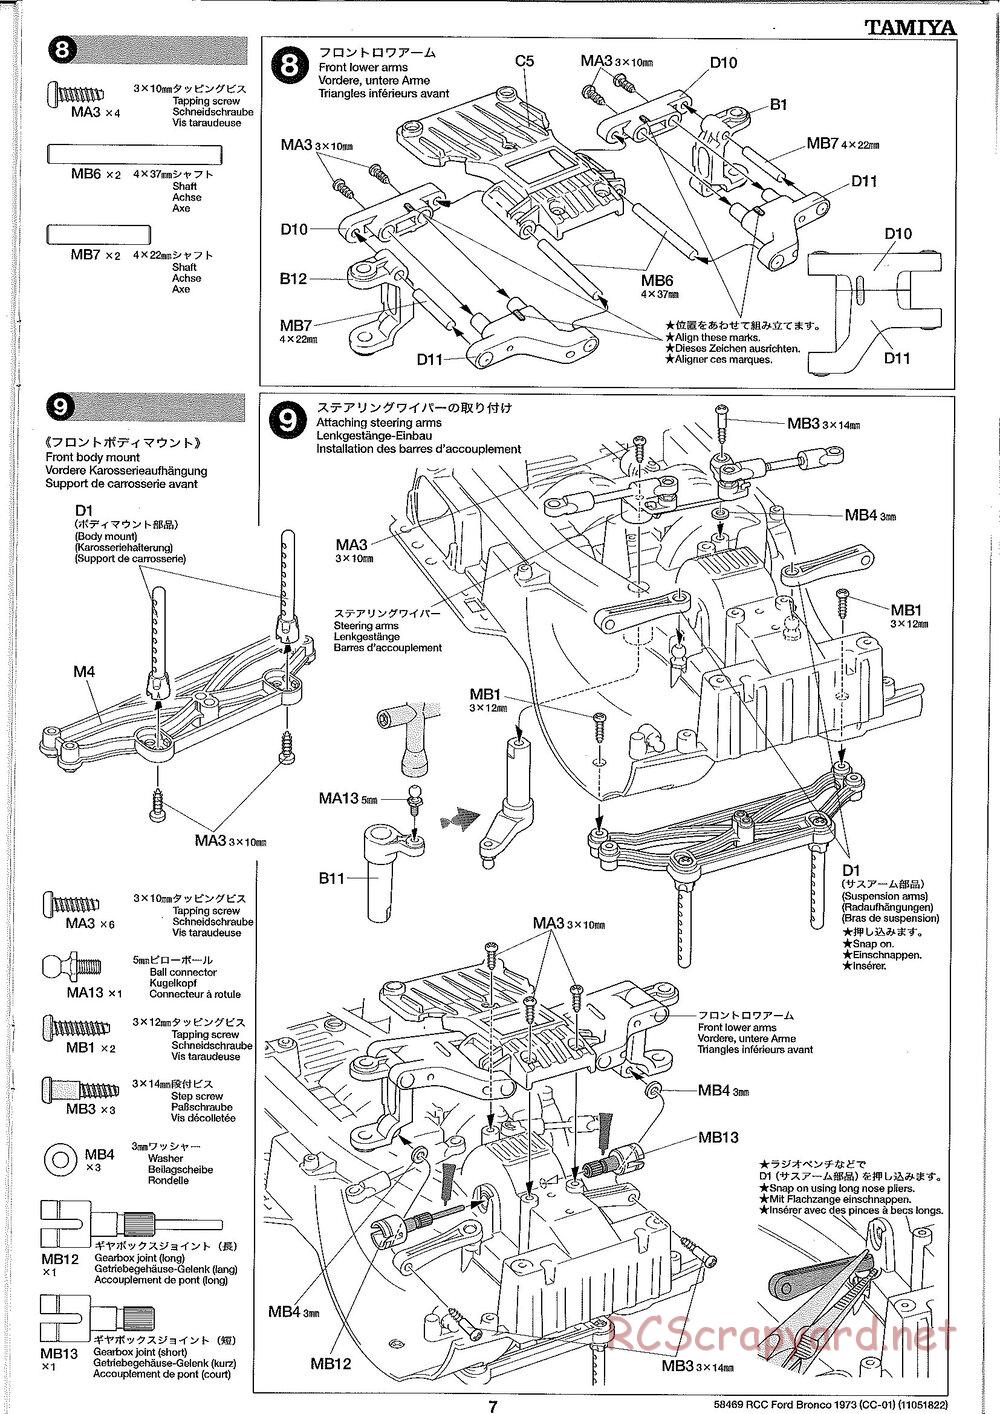 Tamiya - Ford Bronco 1973 - CC-01 Chassis - Manual - Page 7